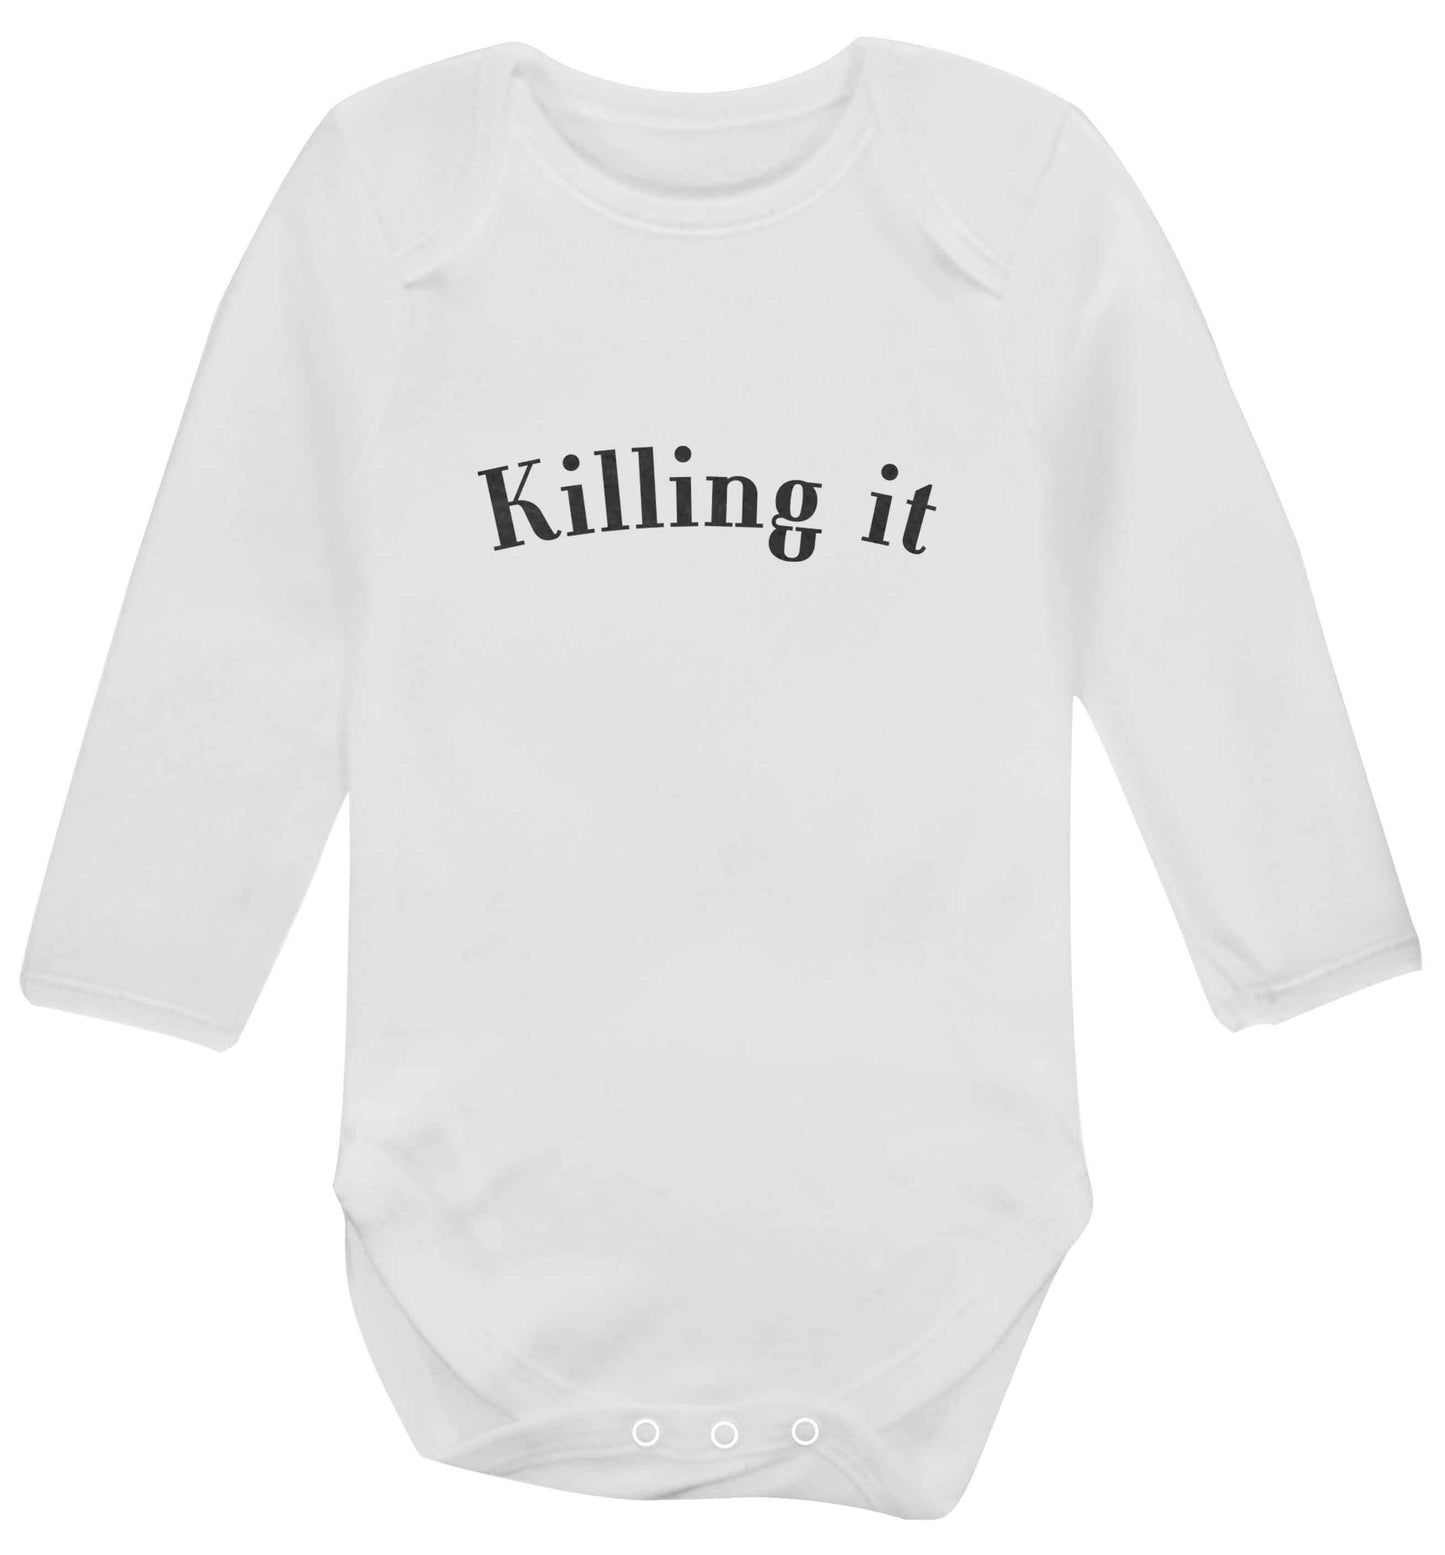 Killing it baby vest long sleeved white 6-12 months